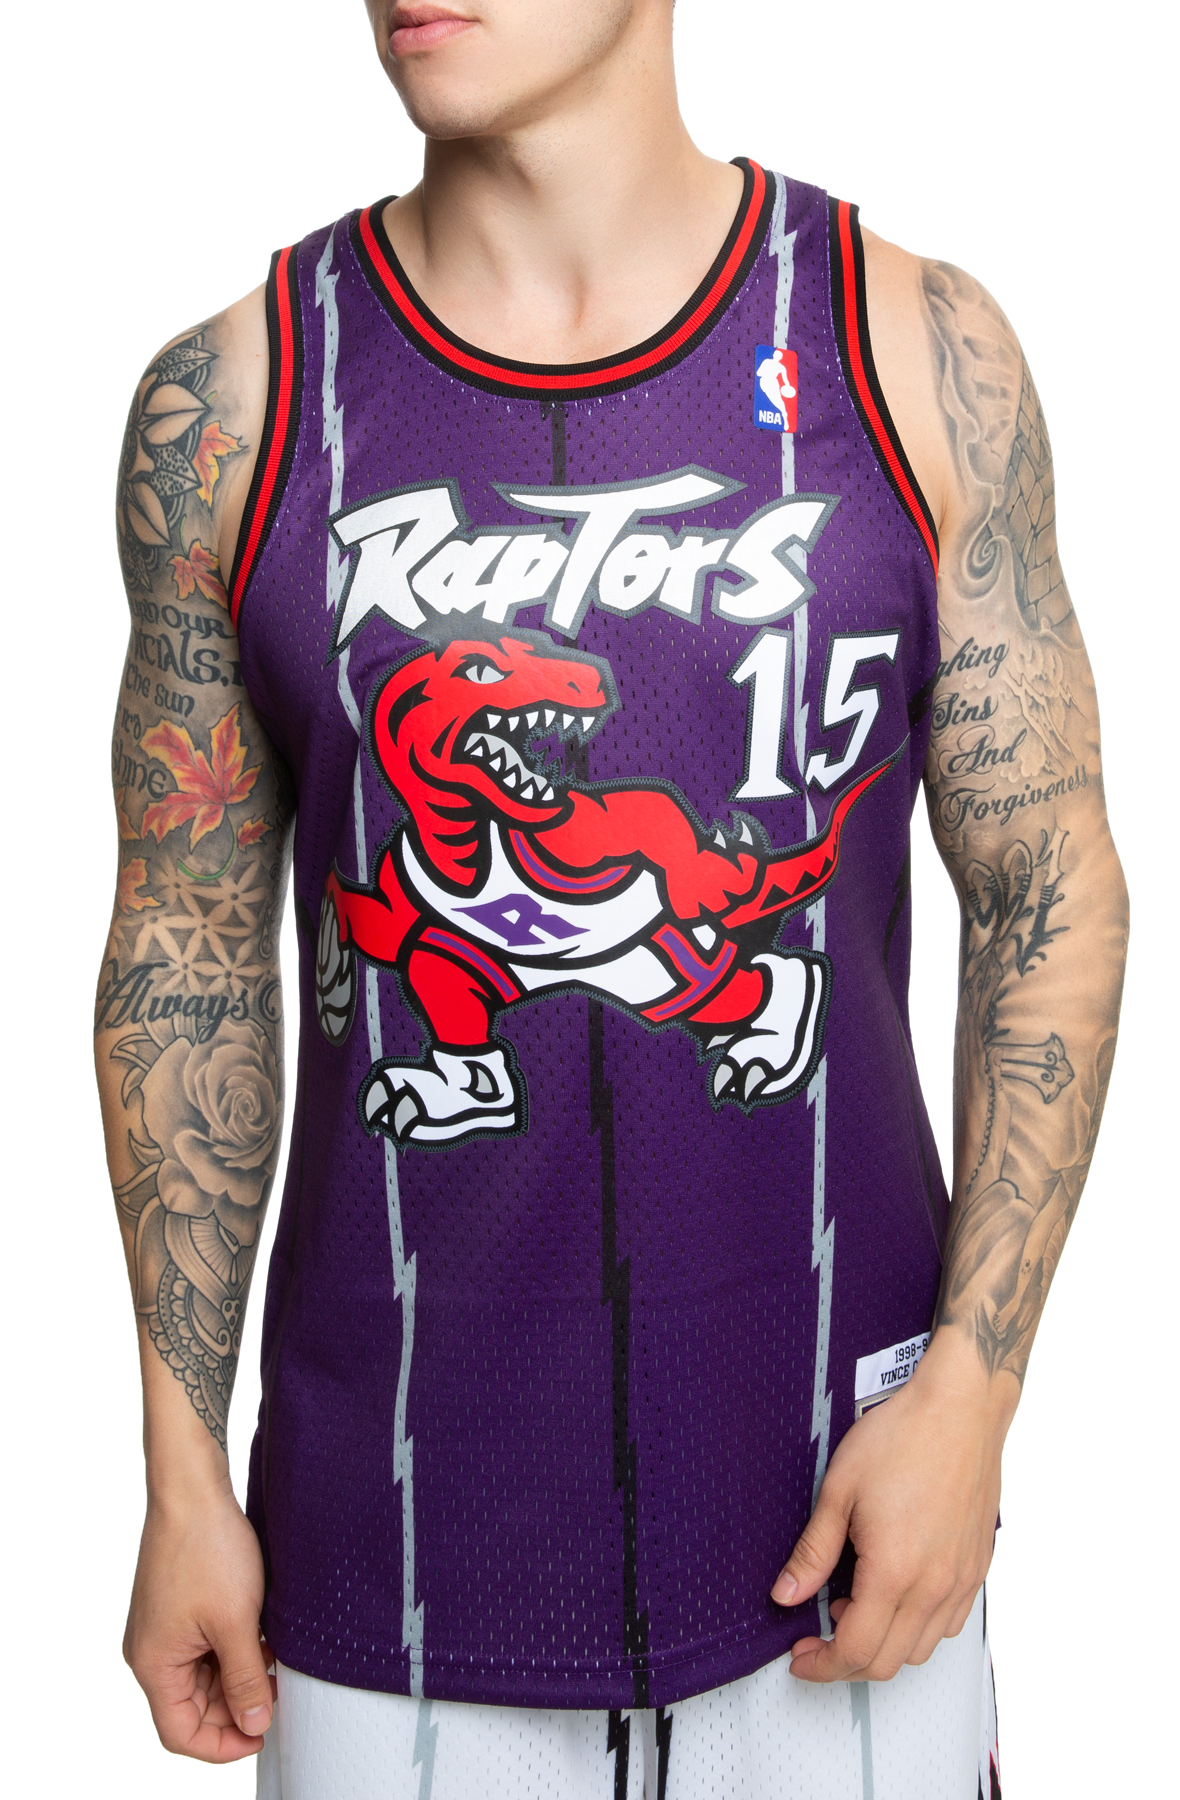 Vince Carter Shirts, Hoodies and Merch, Toronto Raptors